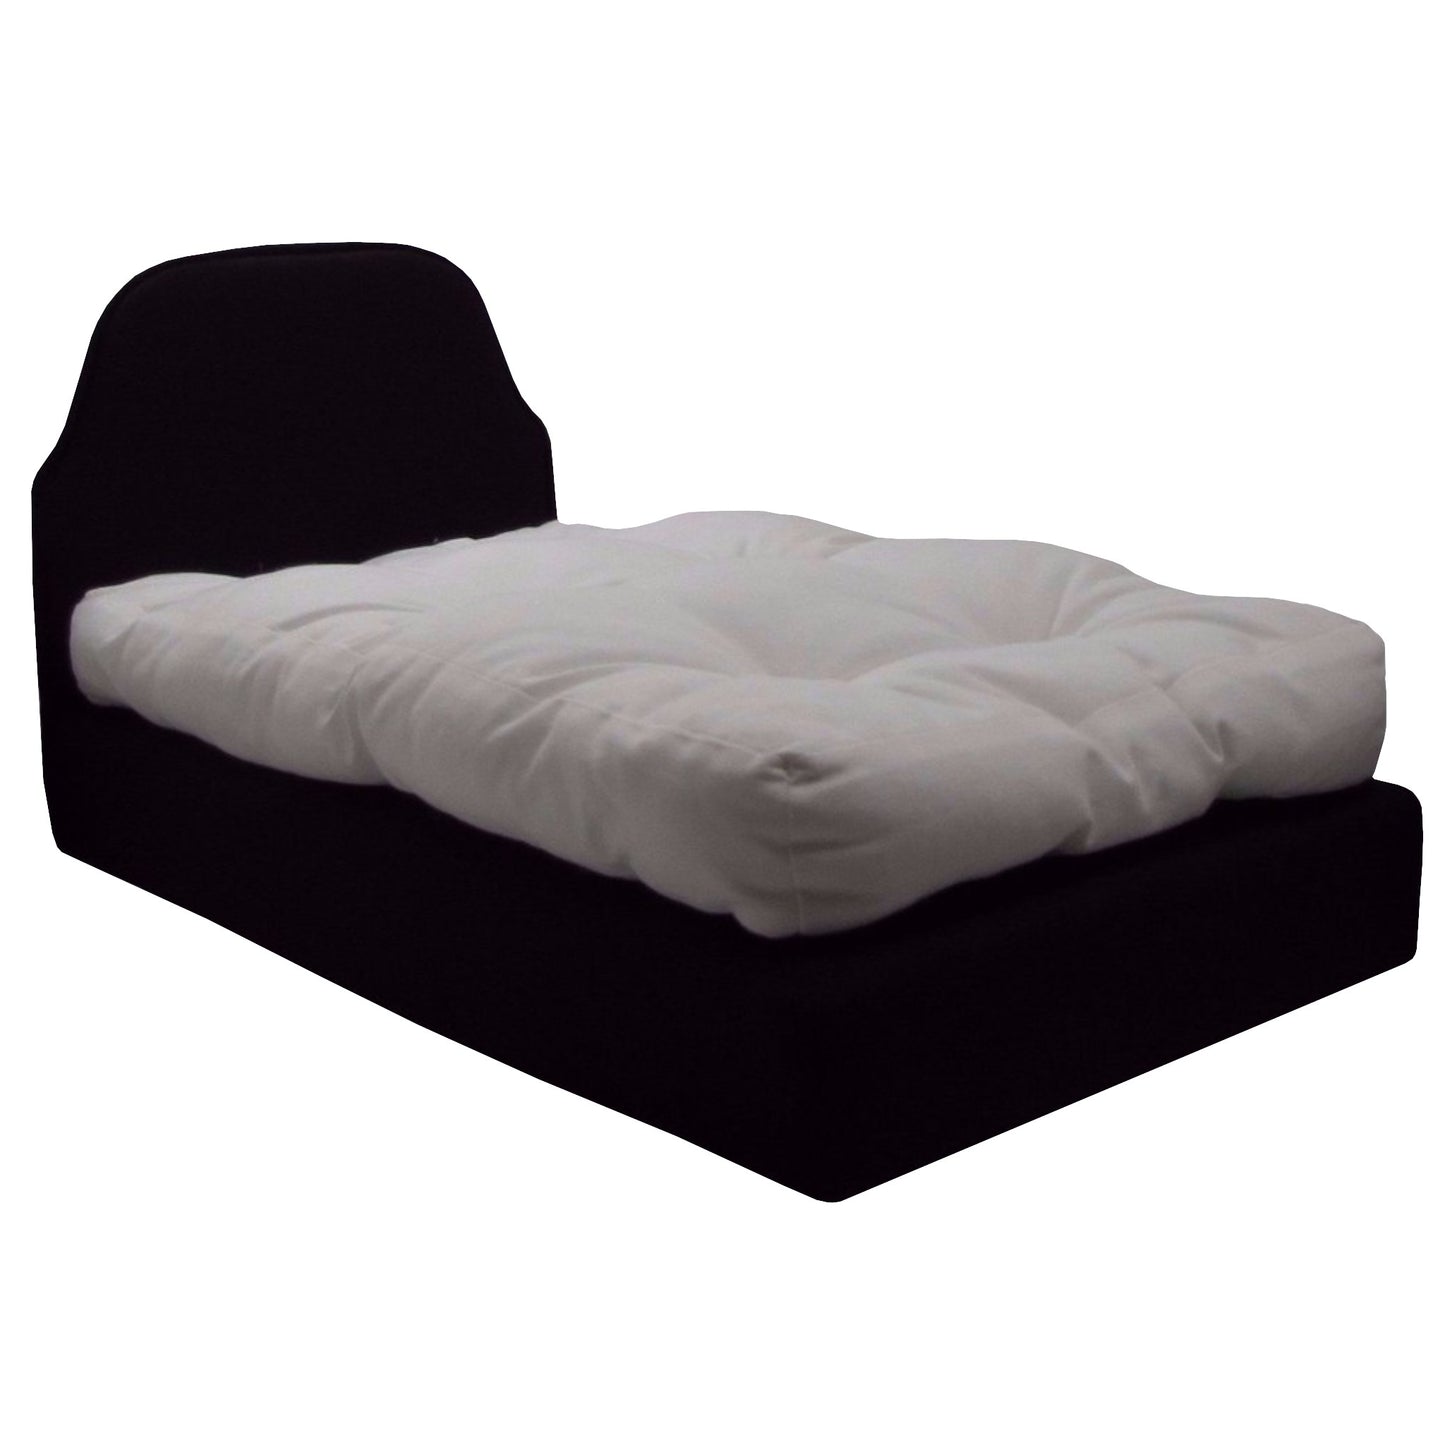 Upholstered Black Doll Bed for 18-inch dolls